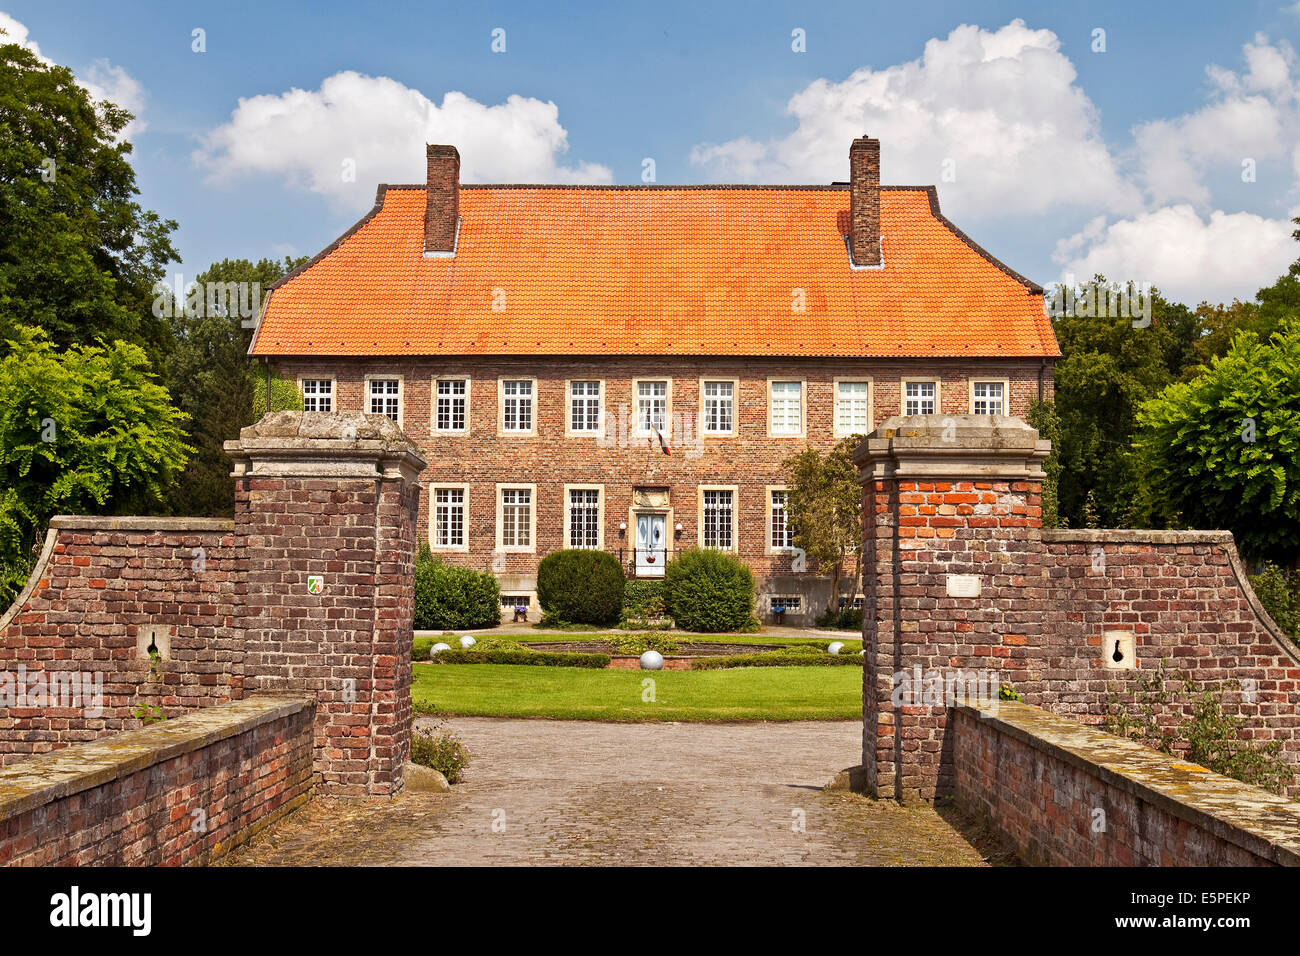 Haus Venne moated castle, Drensteinfurt, Munsterland, North Rhine-Westphalia, Germany Stock Photo